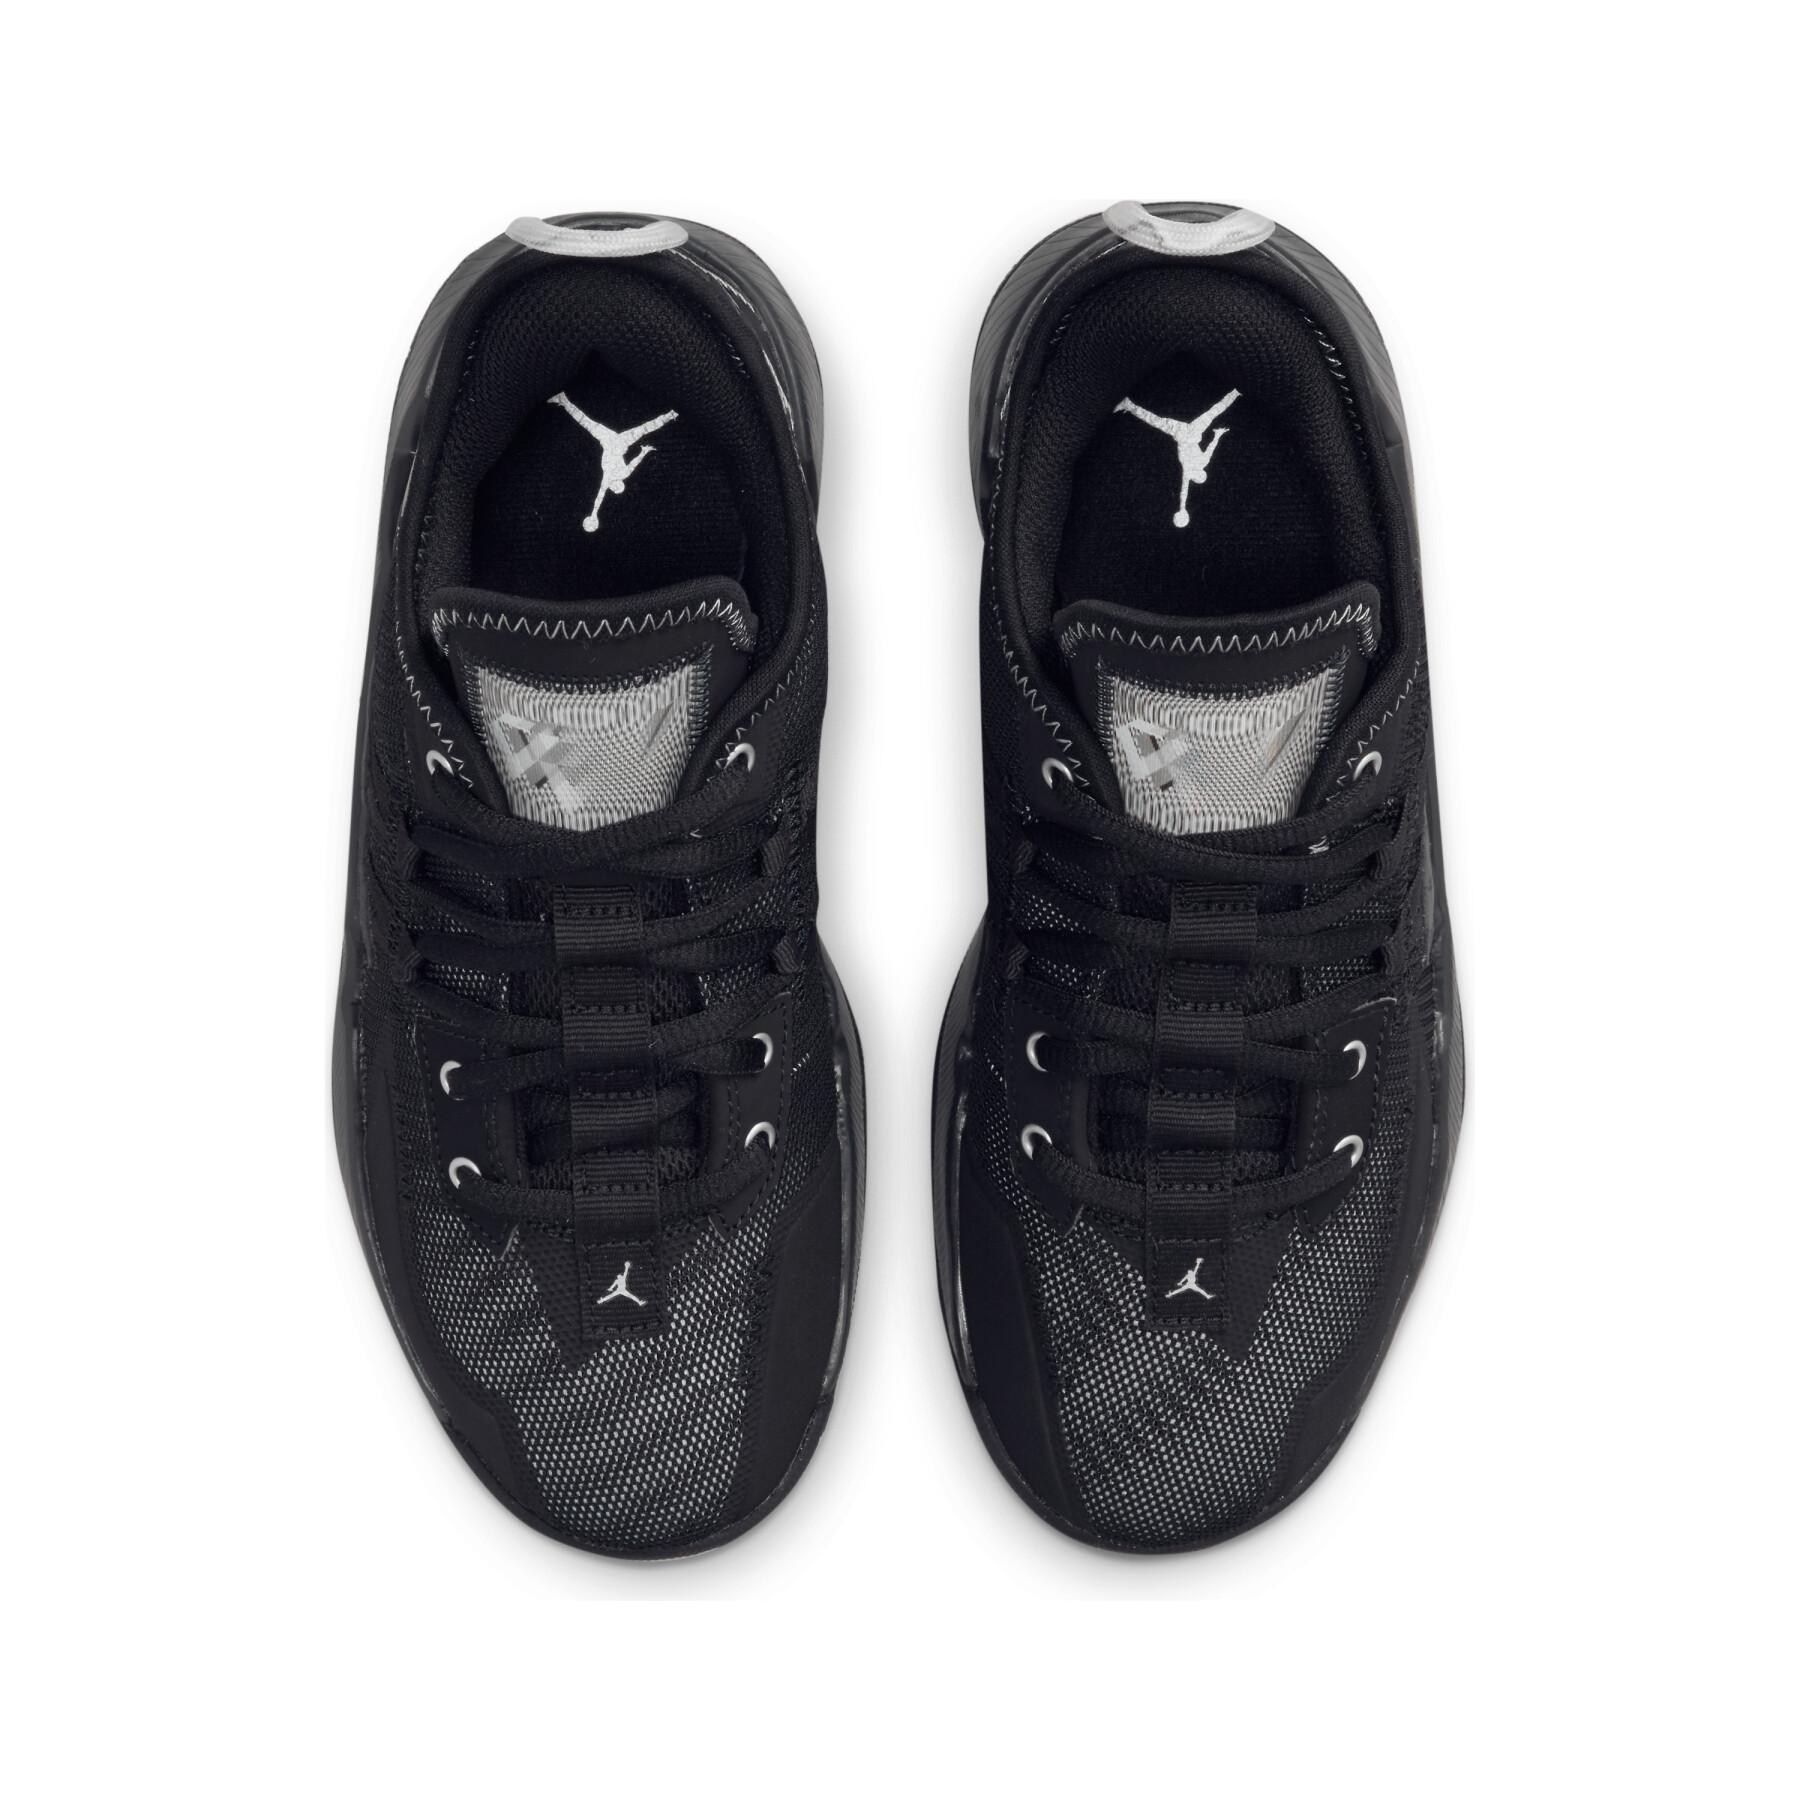 Chaussures de basketball femme Nike Jordan One Take Ii